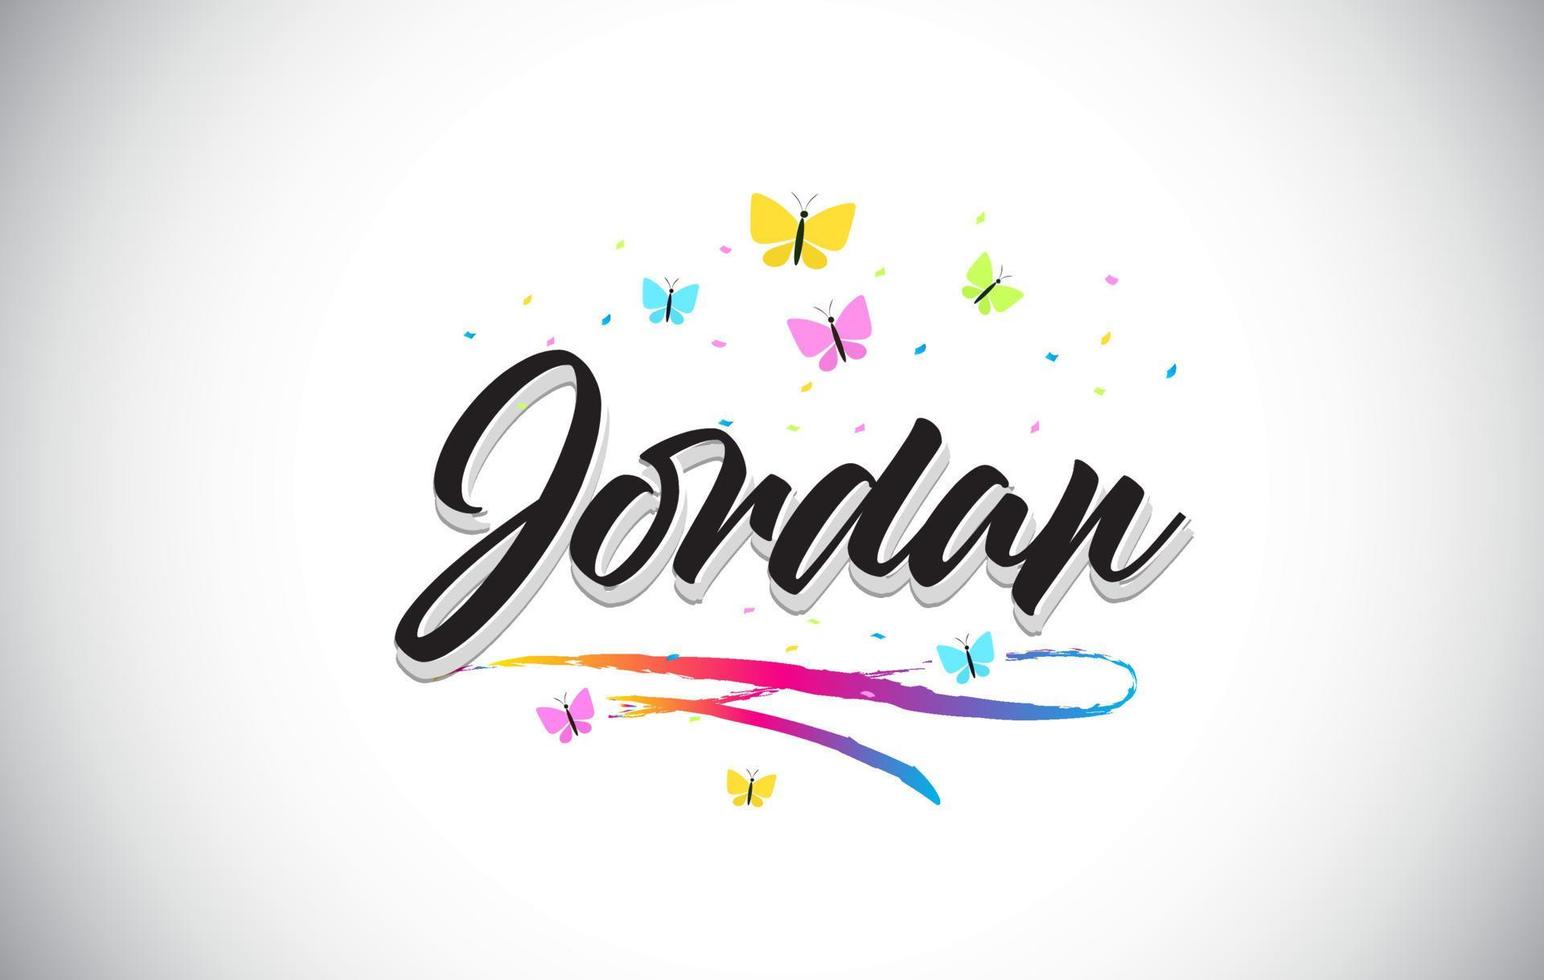 Jordan Handwritten Vector Word Text with Butterflies and Colorful Swoosh.